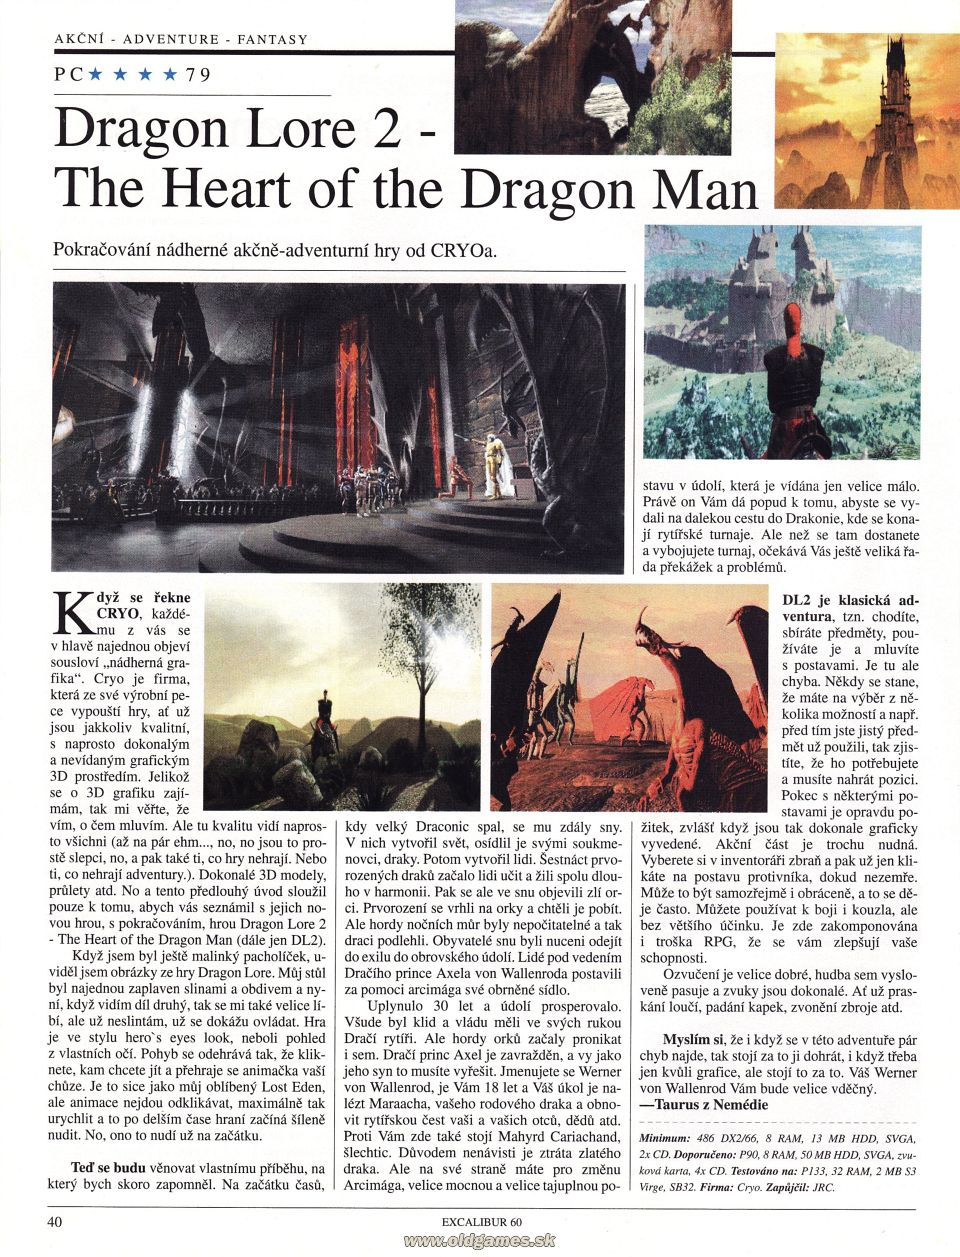 Dragon Lore 2: The Heart of the Dragon Man